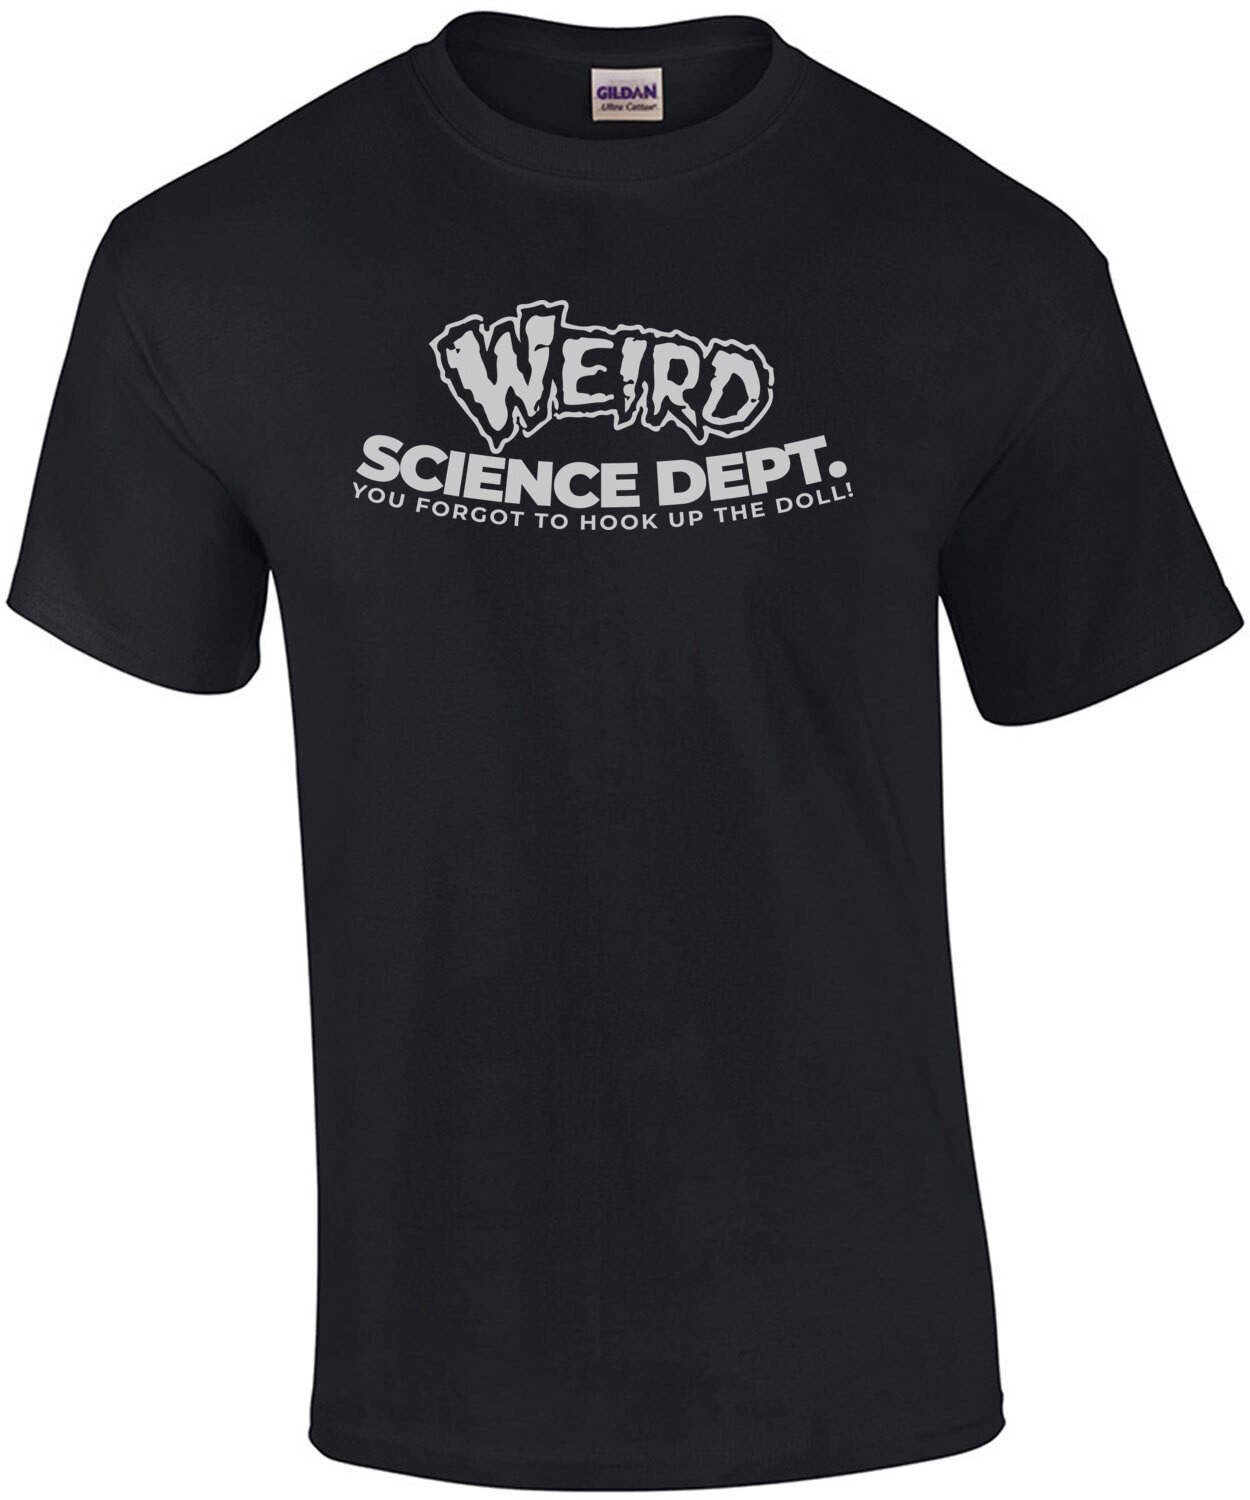 Weird Science Dept. You forgot to hook up the doll! - Weird Science 80's T-Shirt